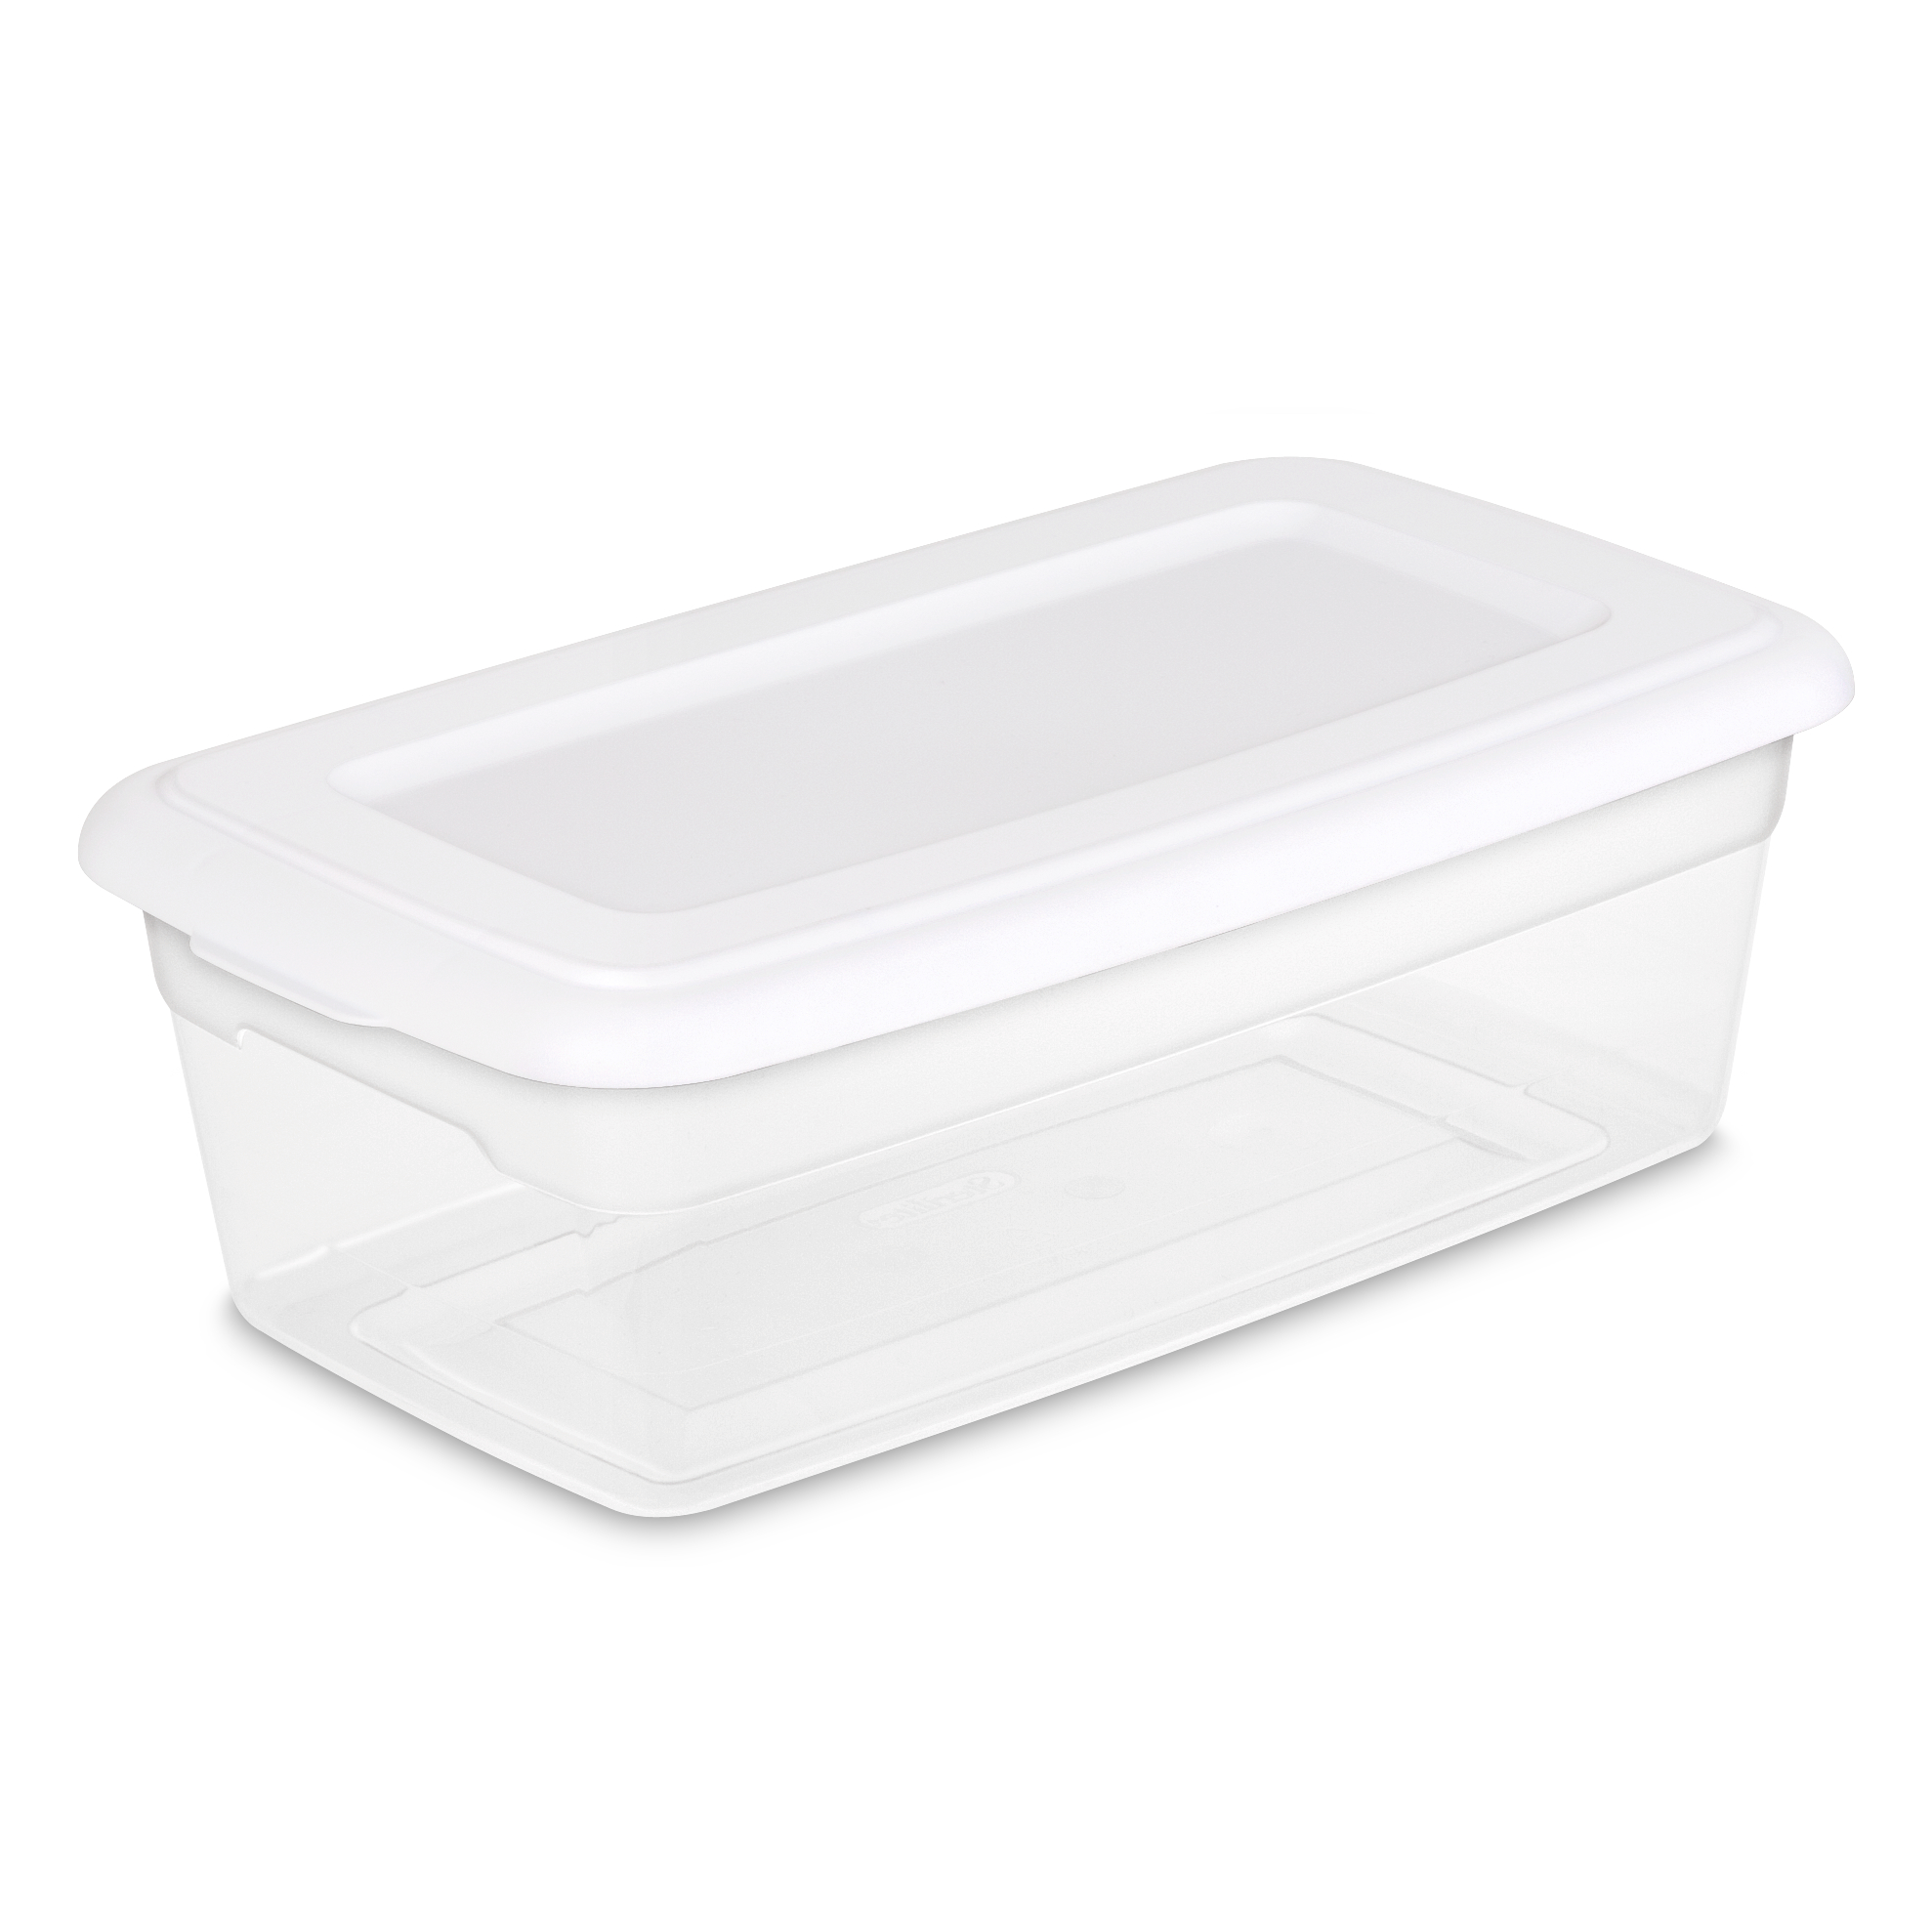 Sterilite 6 Qt. Clear Plastic Storage Box with White Lid - image 1 of 6